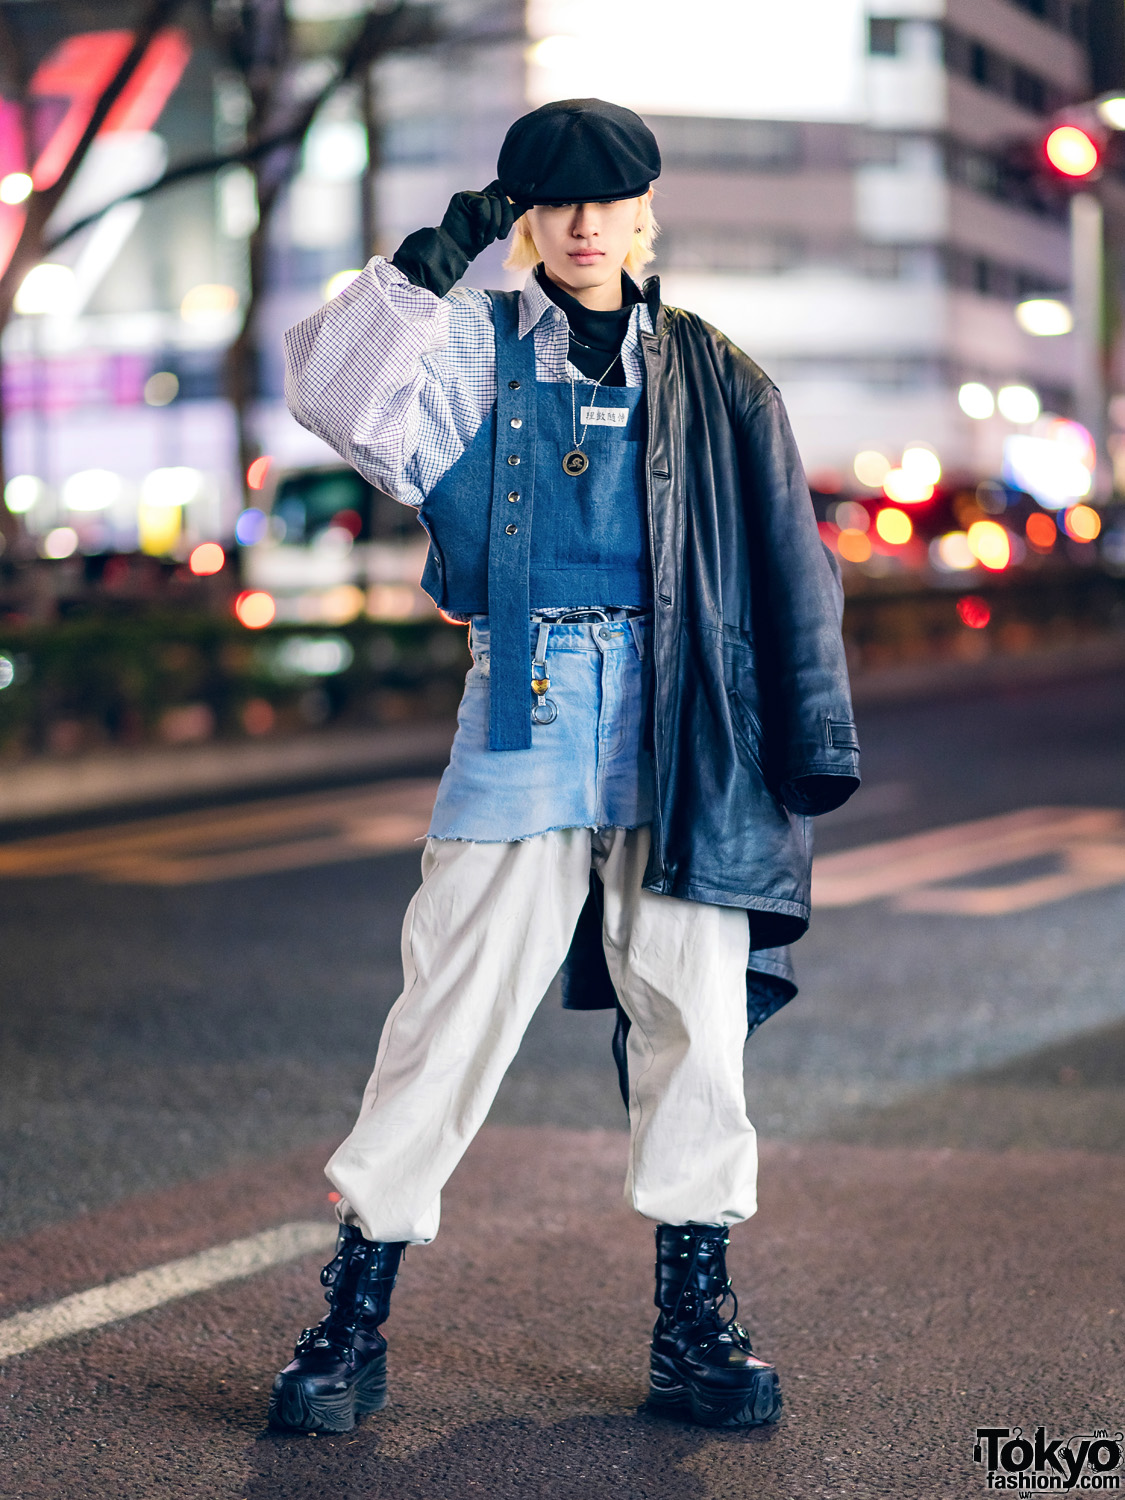 Harajuku Layered Street Style w/ Newsboy Cap, Leather Coat, Denim Skirt Over Parachute Pants, Black Gloves & Yosuke Boots